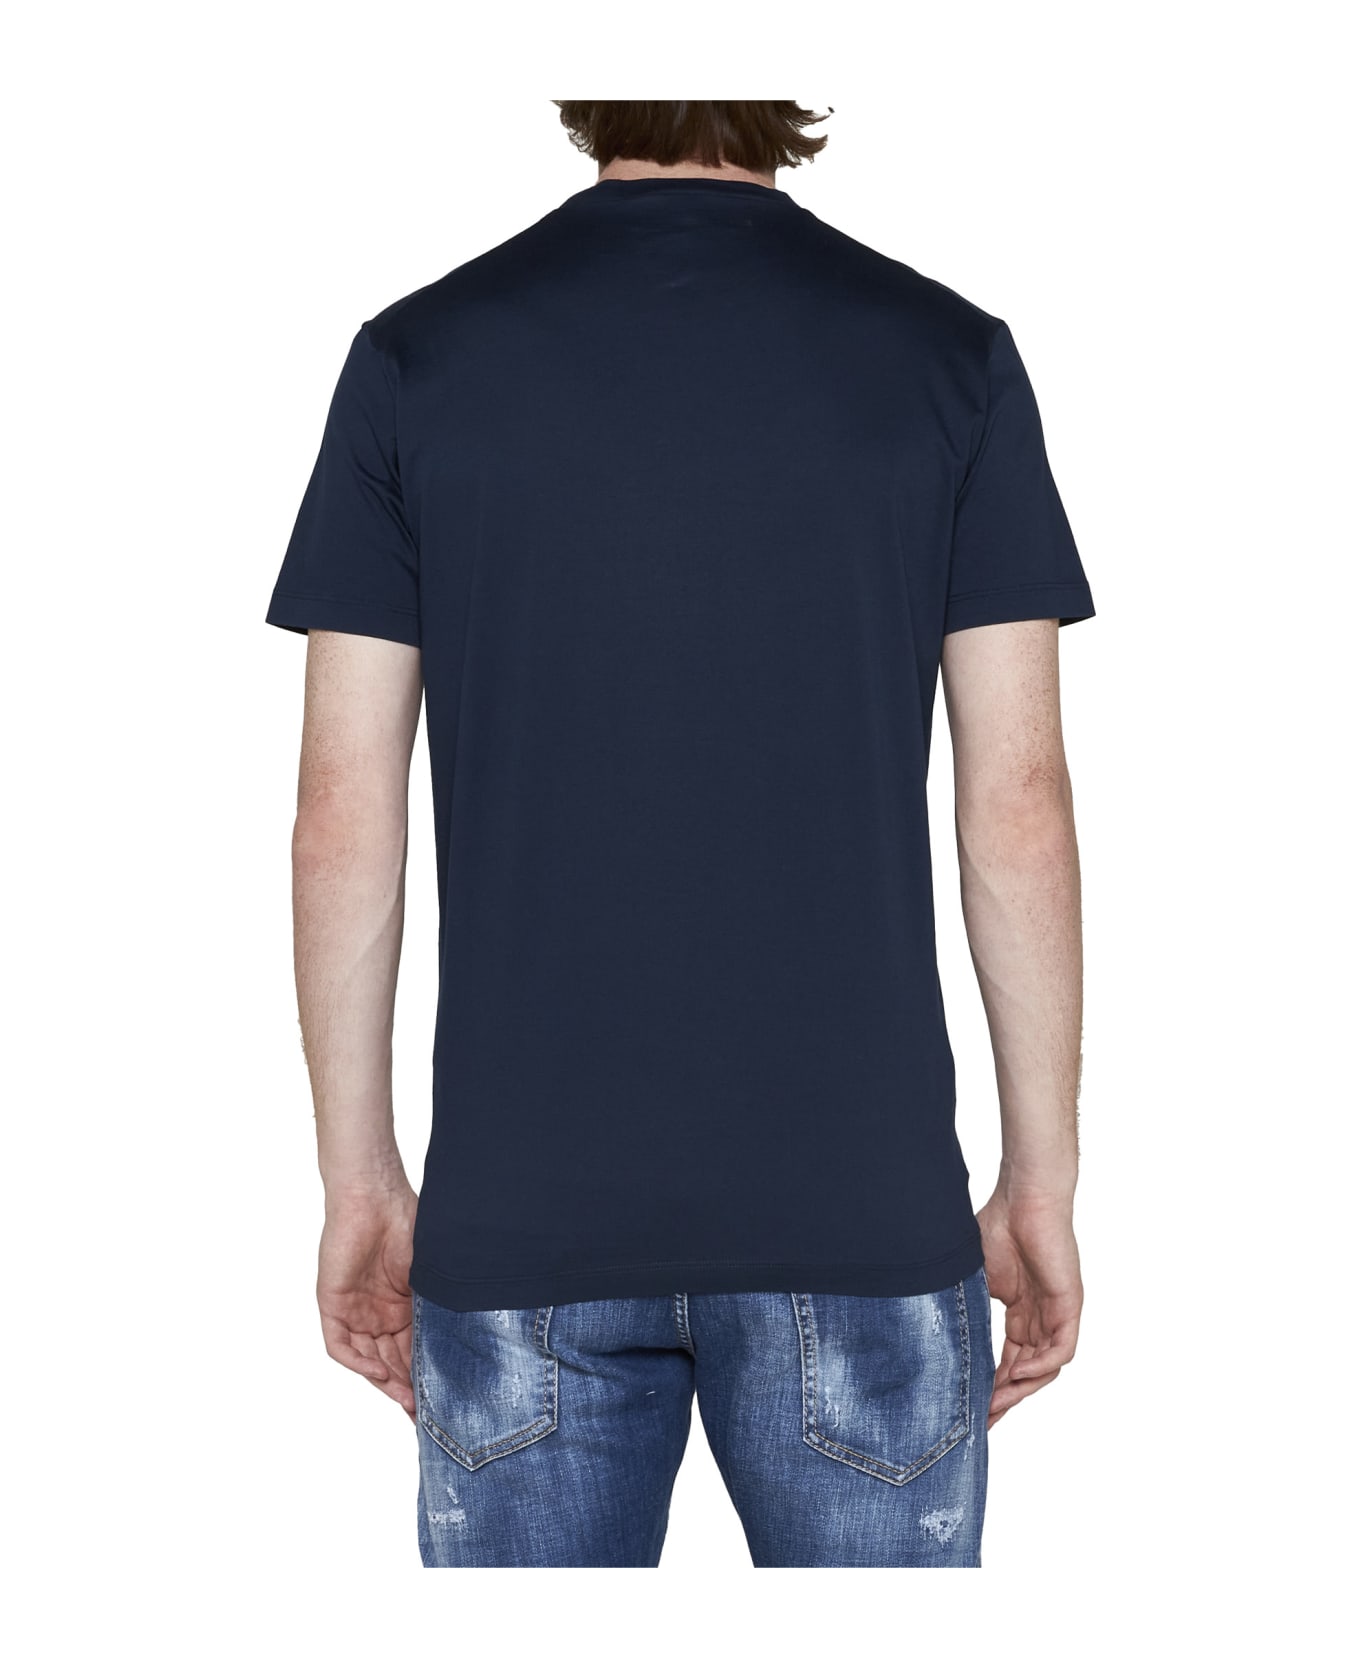 Dsquared2 Logo Print Regular T-shirt - Navy blue シャツ